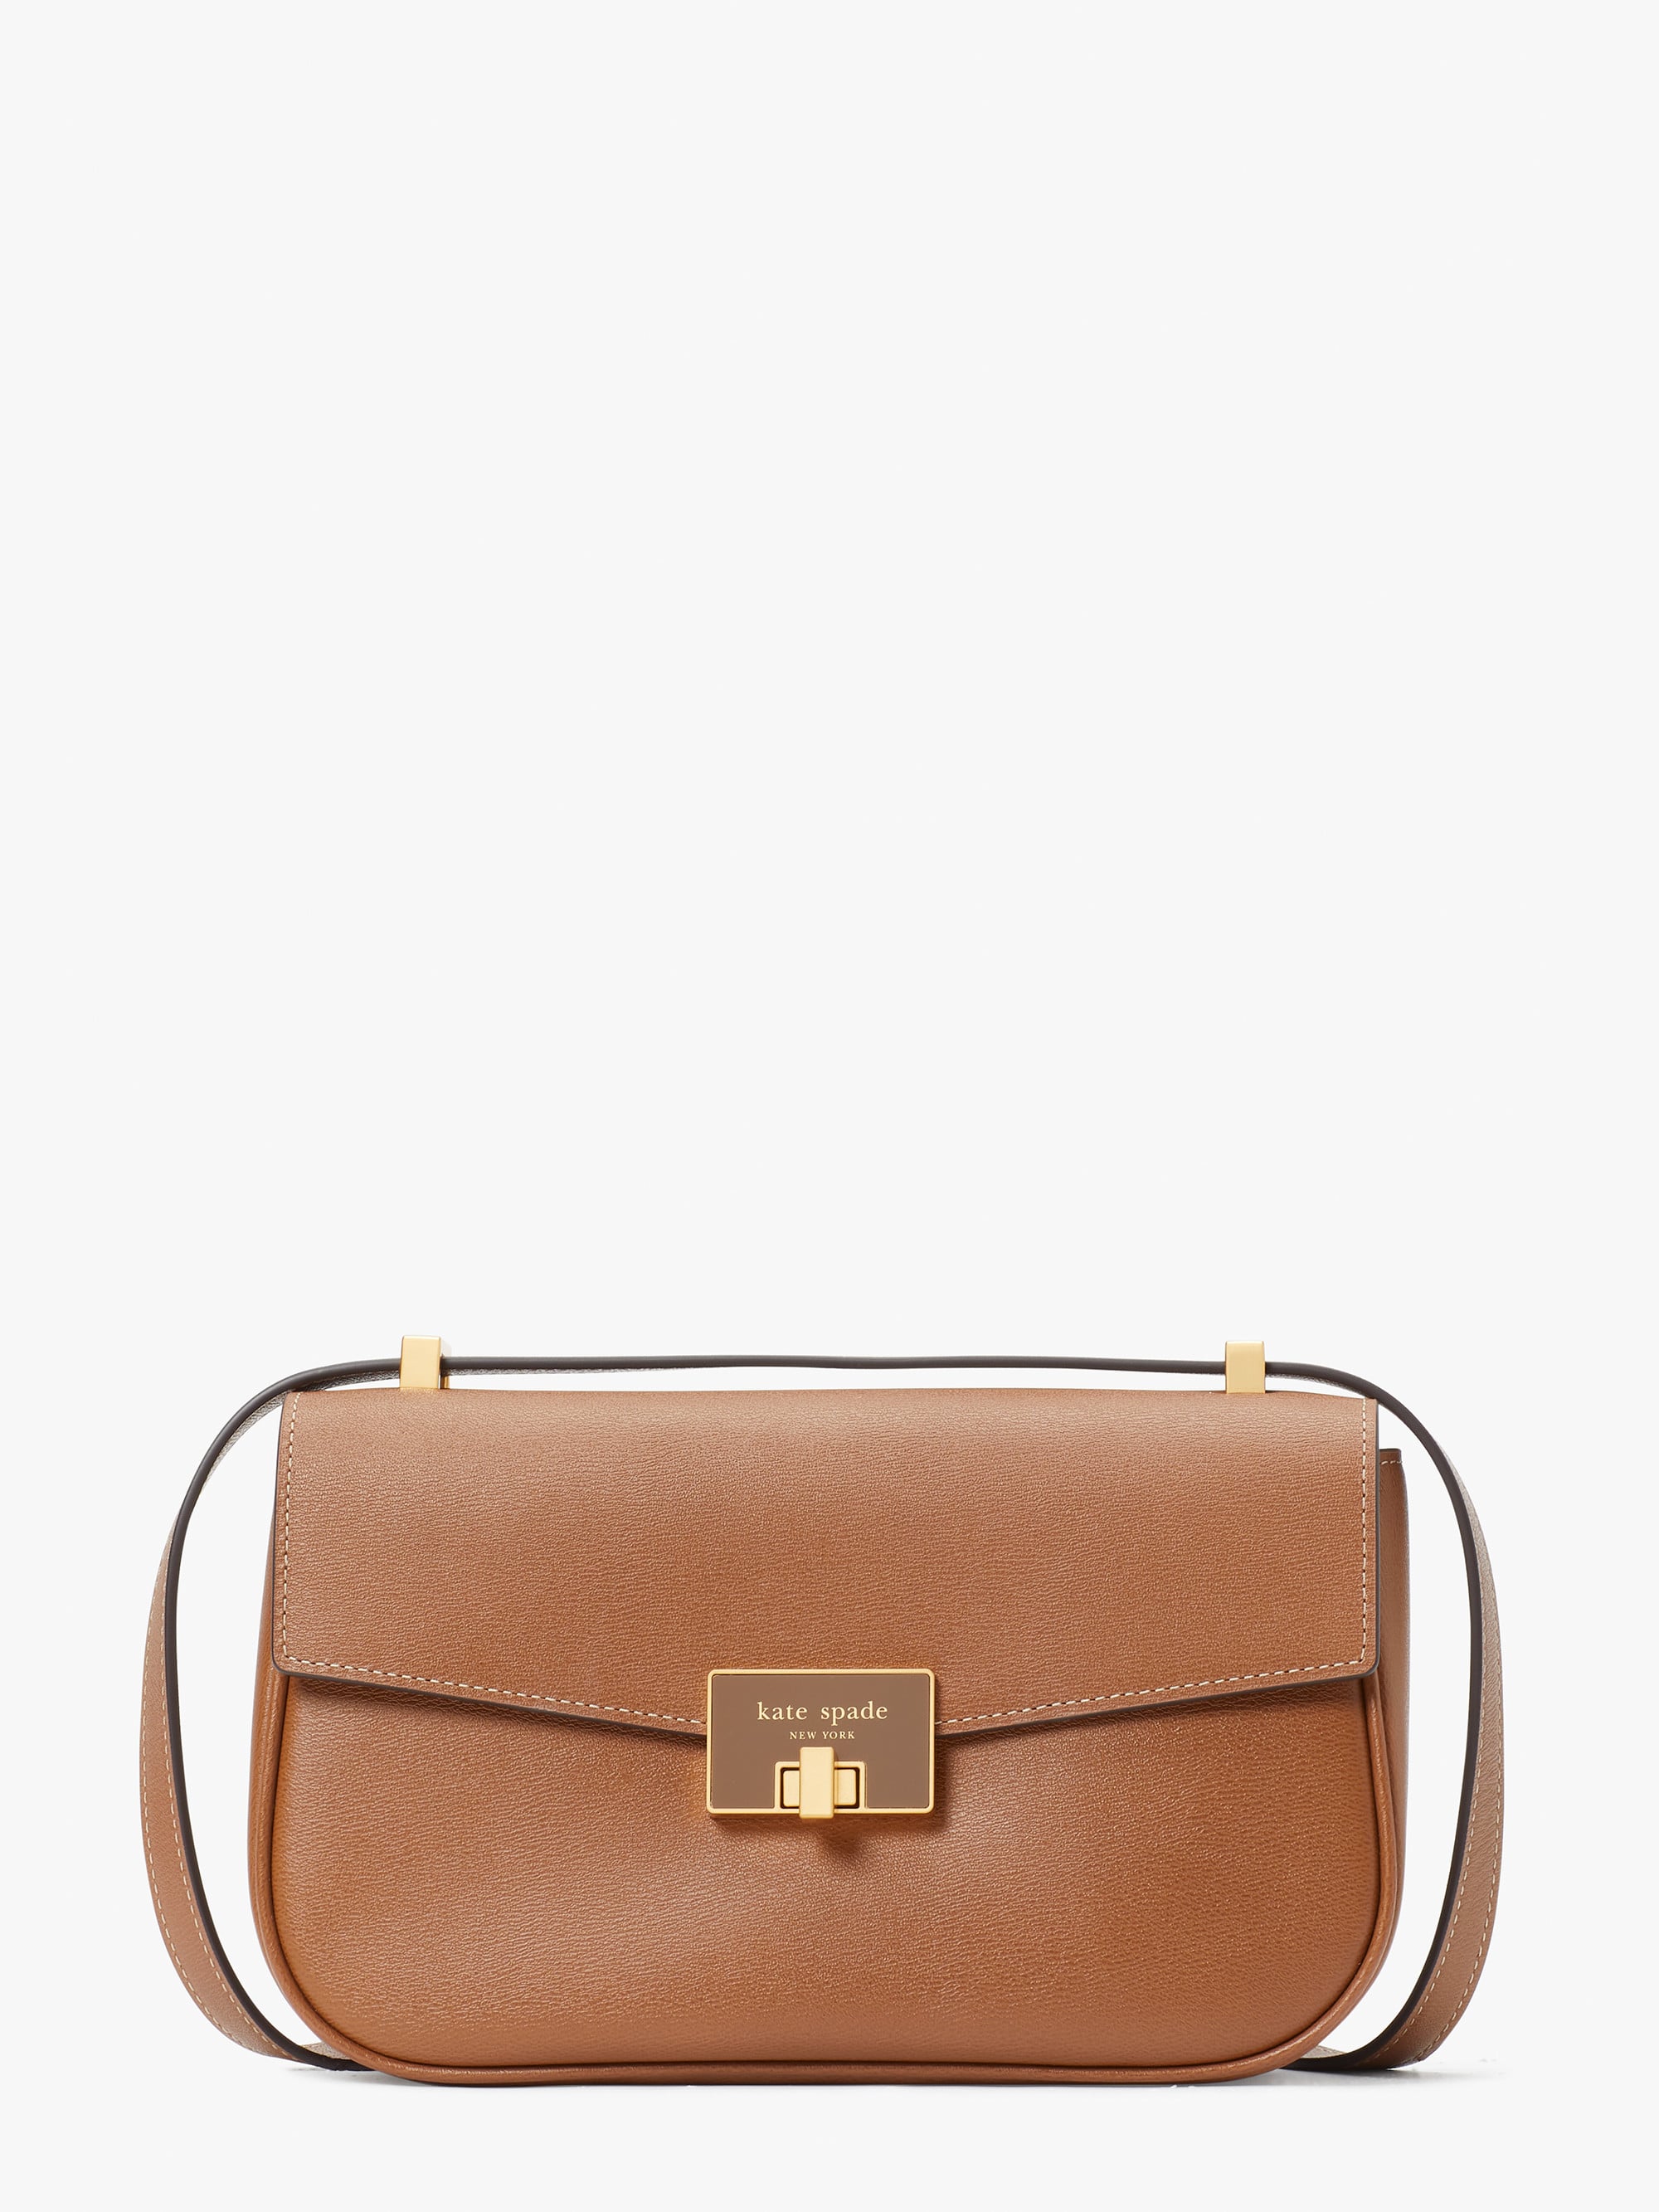 A Neutral Staple: Kate Spade New York Katy Twistlock Medium Shoulder Bag |  The 15 Prettiest Spring Handbags to Shop From Kate Spade's Sale | POPSUGAR  Fashion Photo 3